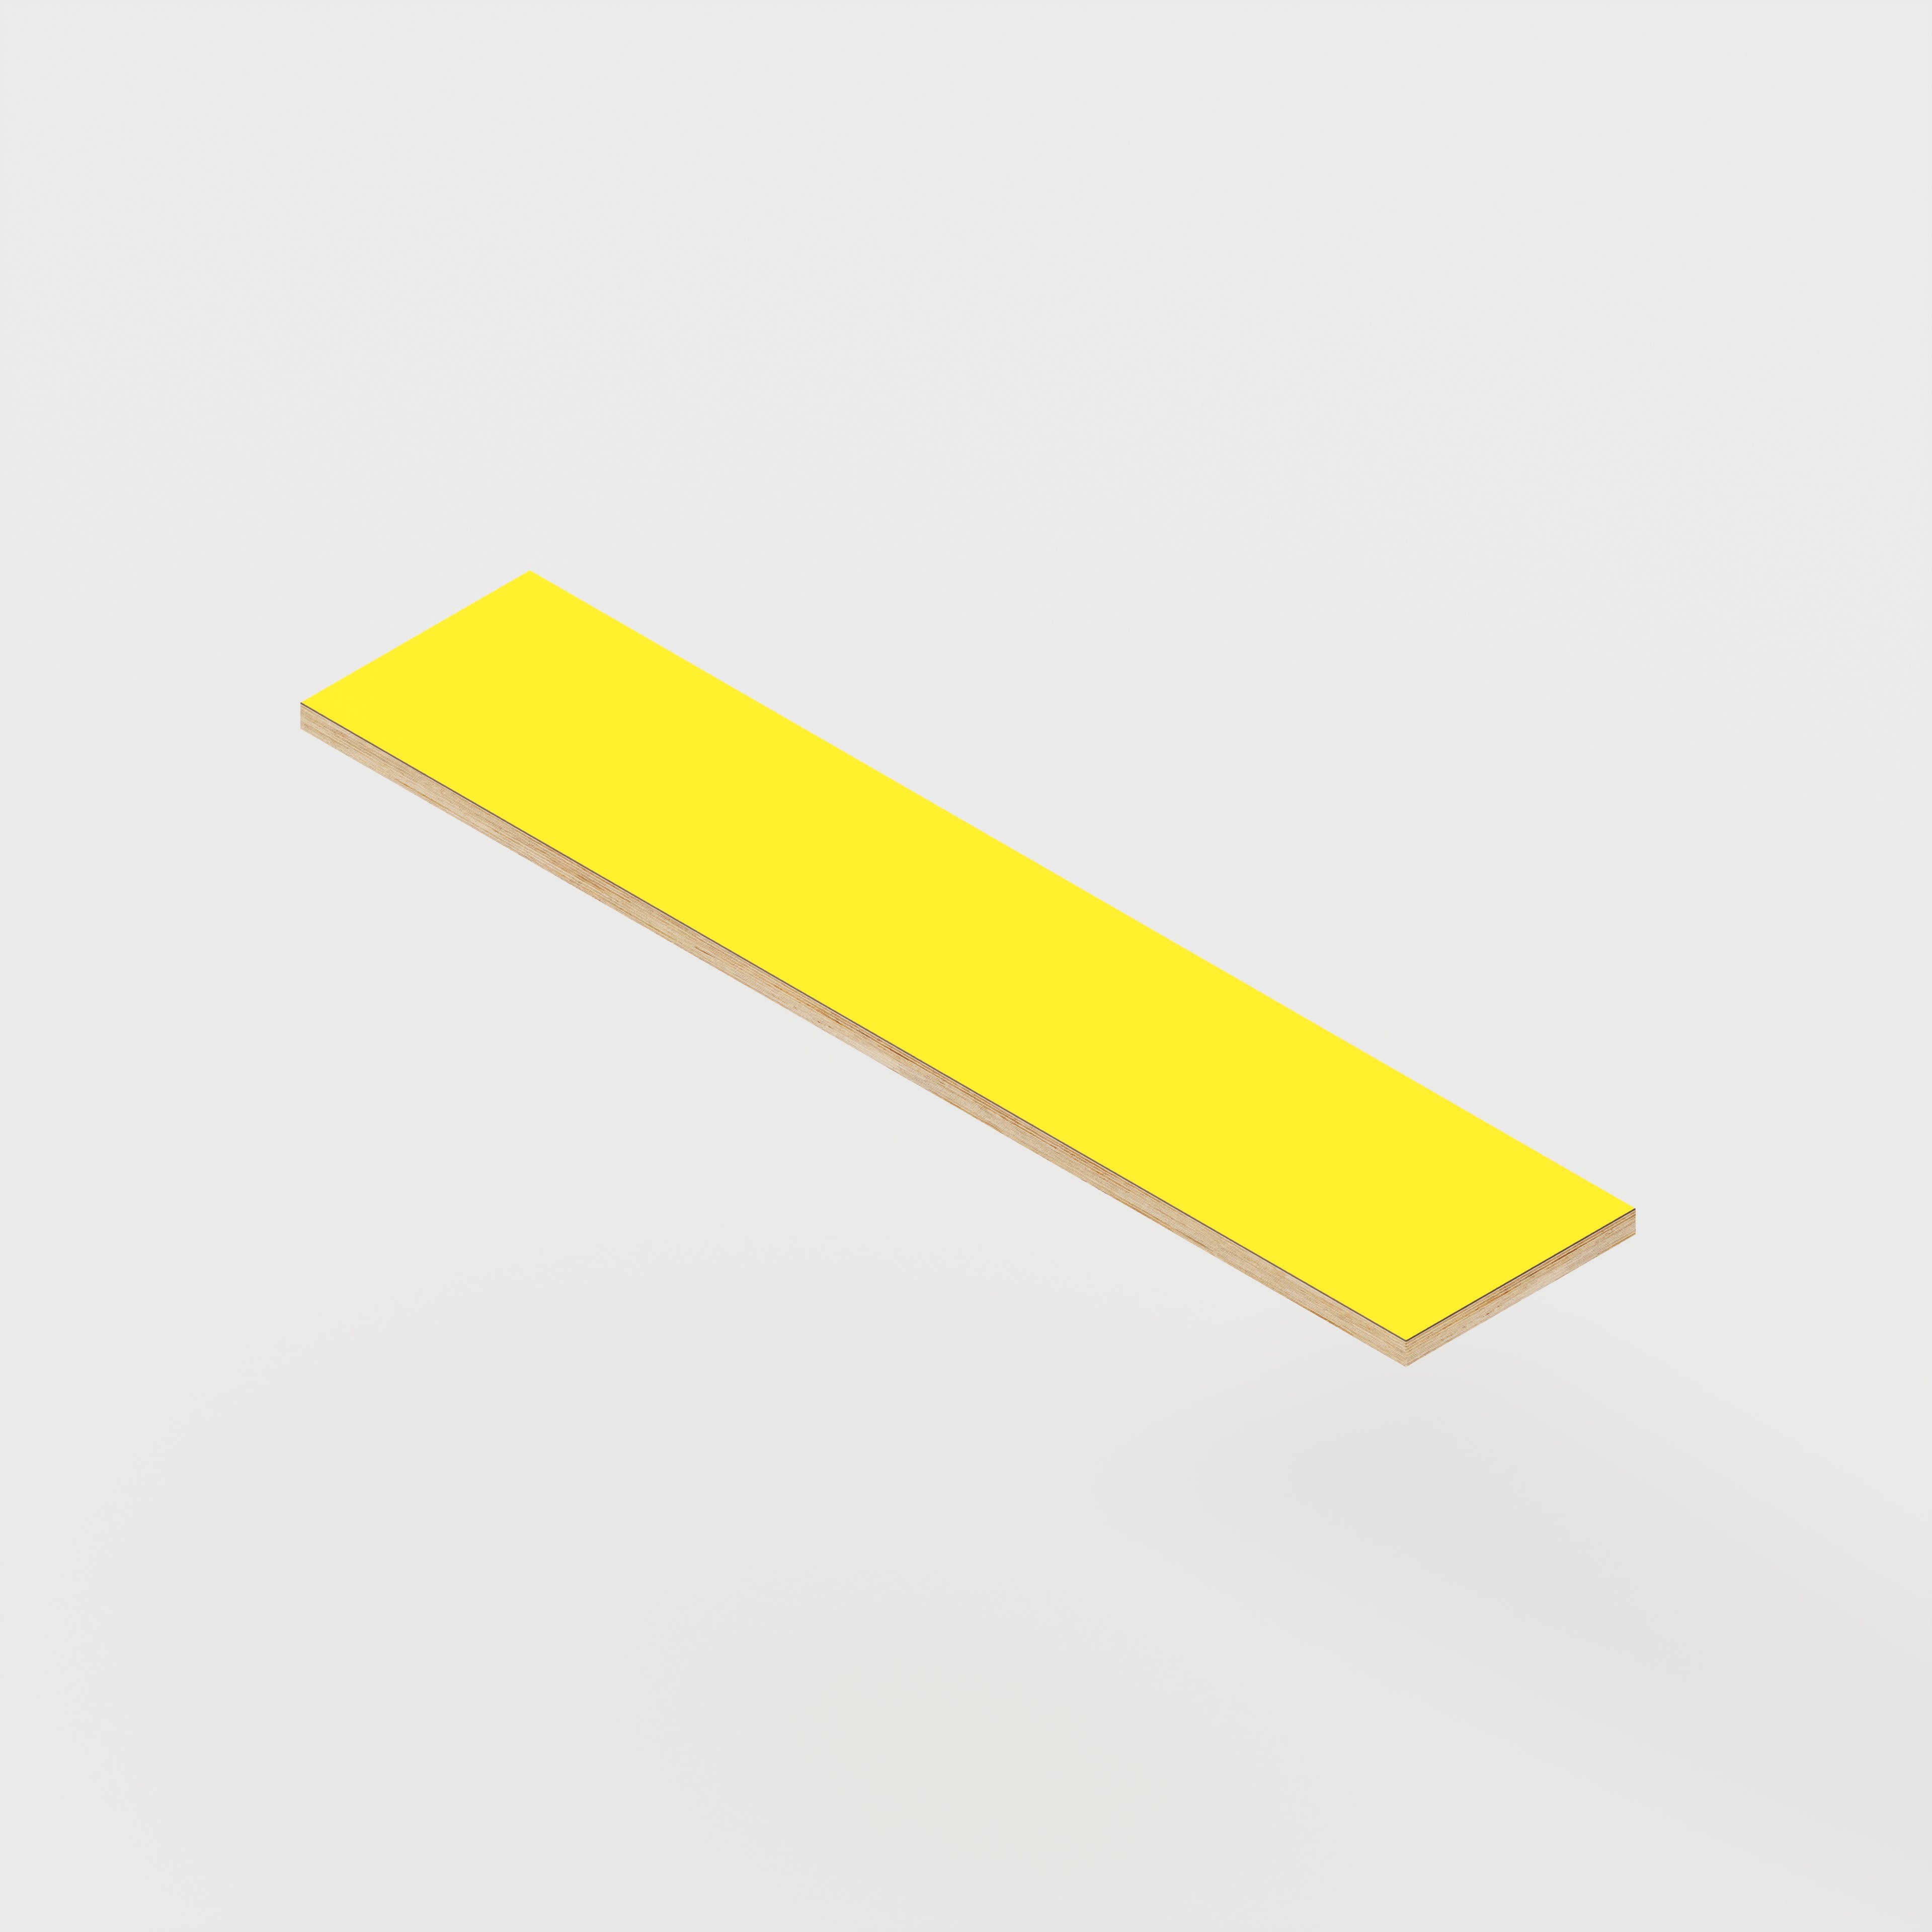 Shelf - Formica Chrome Yellow - 1200(w) x 250(d) - 24mm